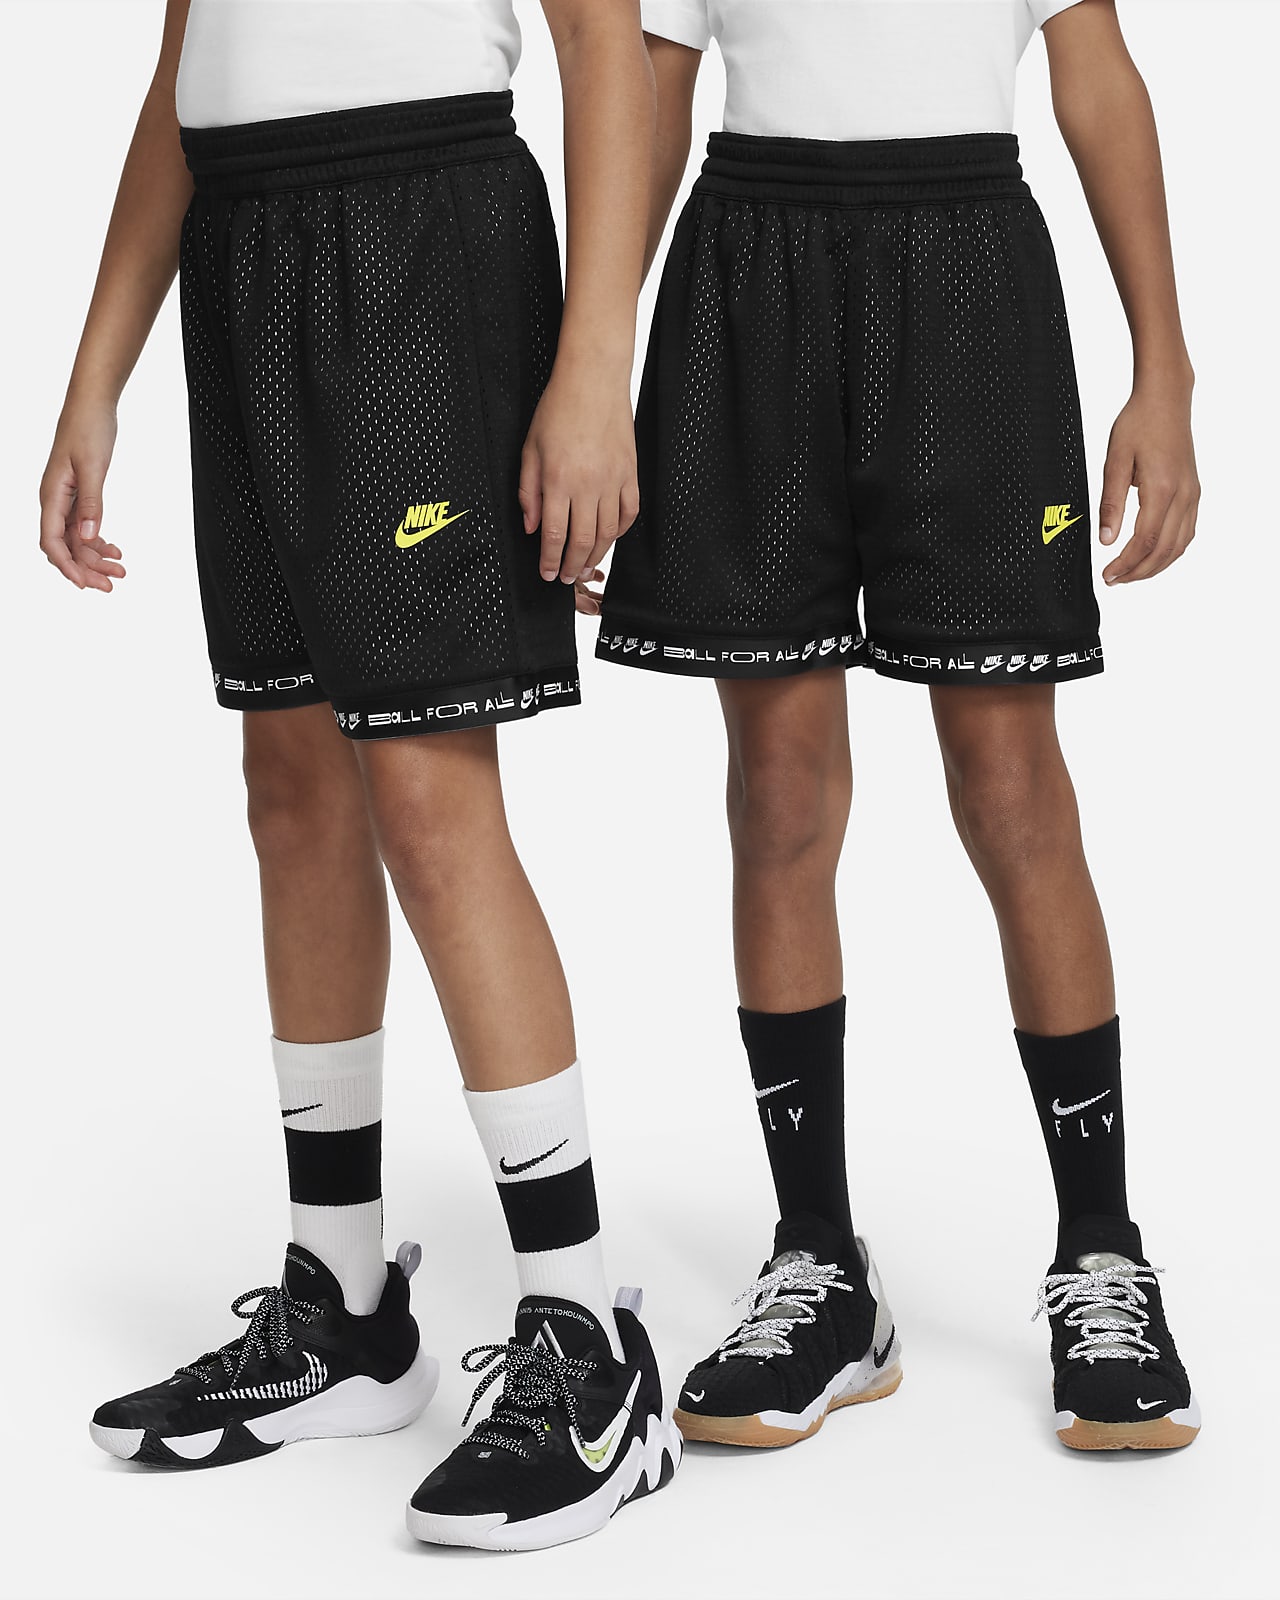 Nike Culture of Basketball Older Kids' Reversible Basketball Shorts